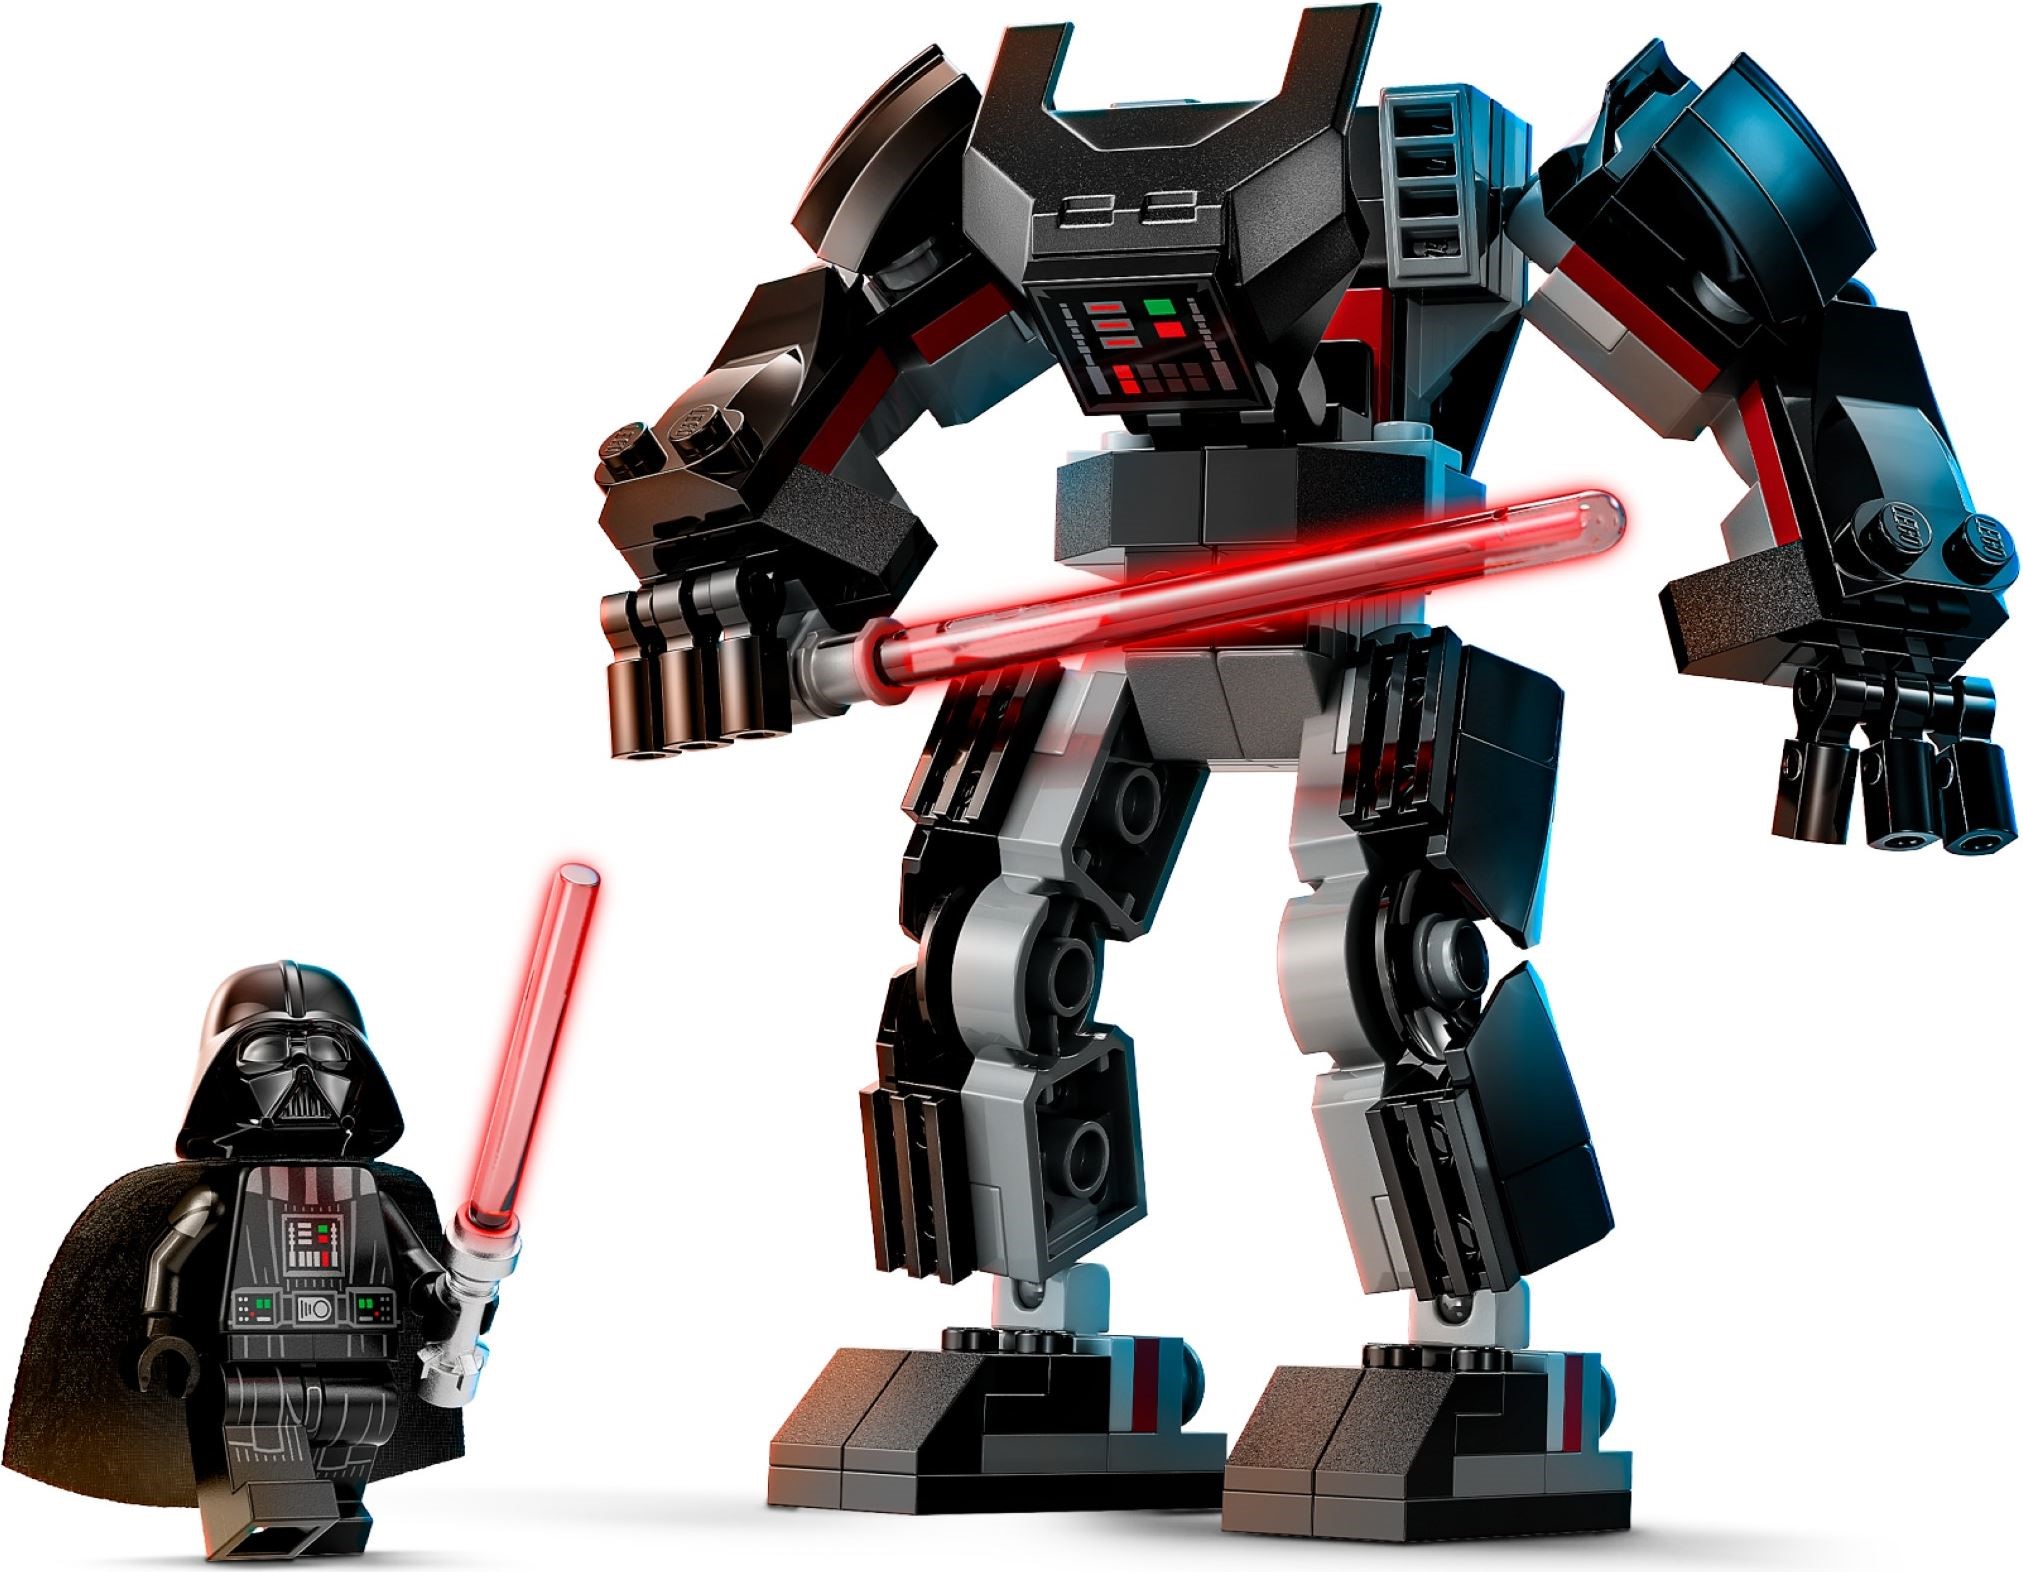 75368 Star Wars Mechs Darth Vader Mech - Đồ chơi lắp ráp Chiến giáp Darth Vader